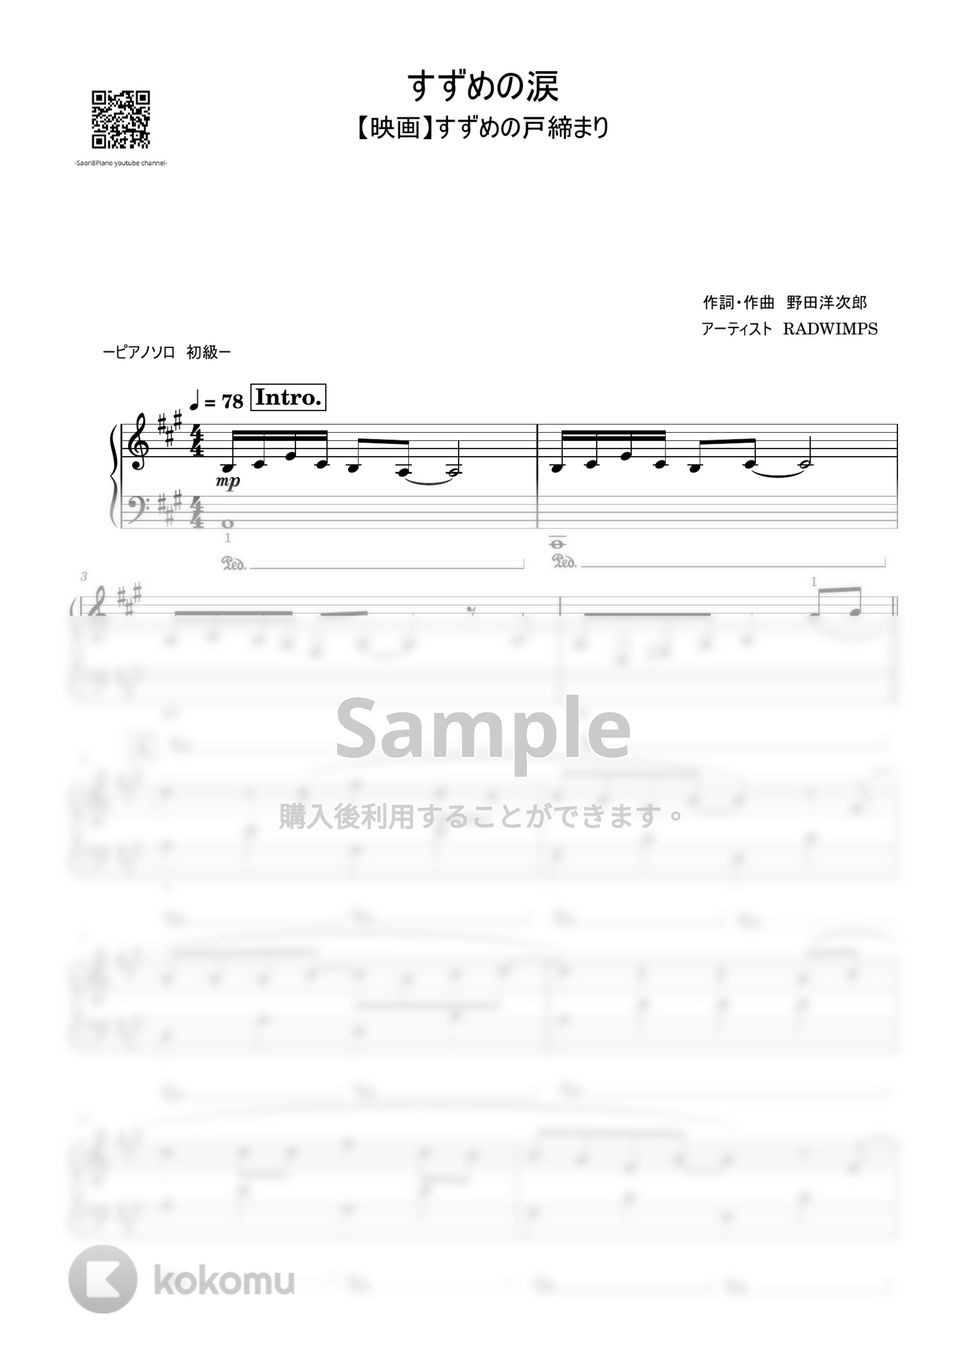 RADWIMPS - すずめの涙 (すずめの戸締まり/初級レベル) by Saori8Piano